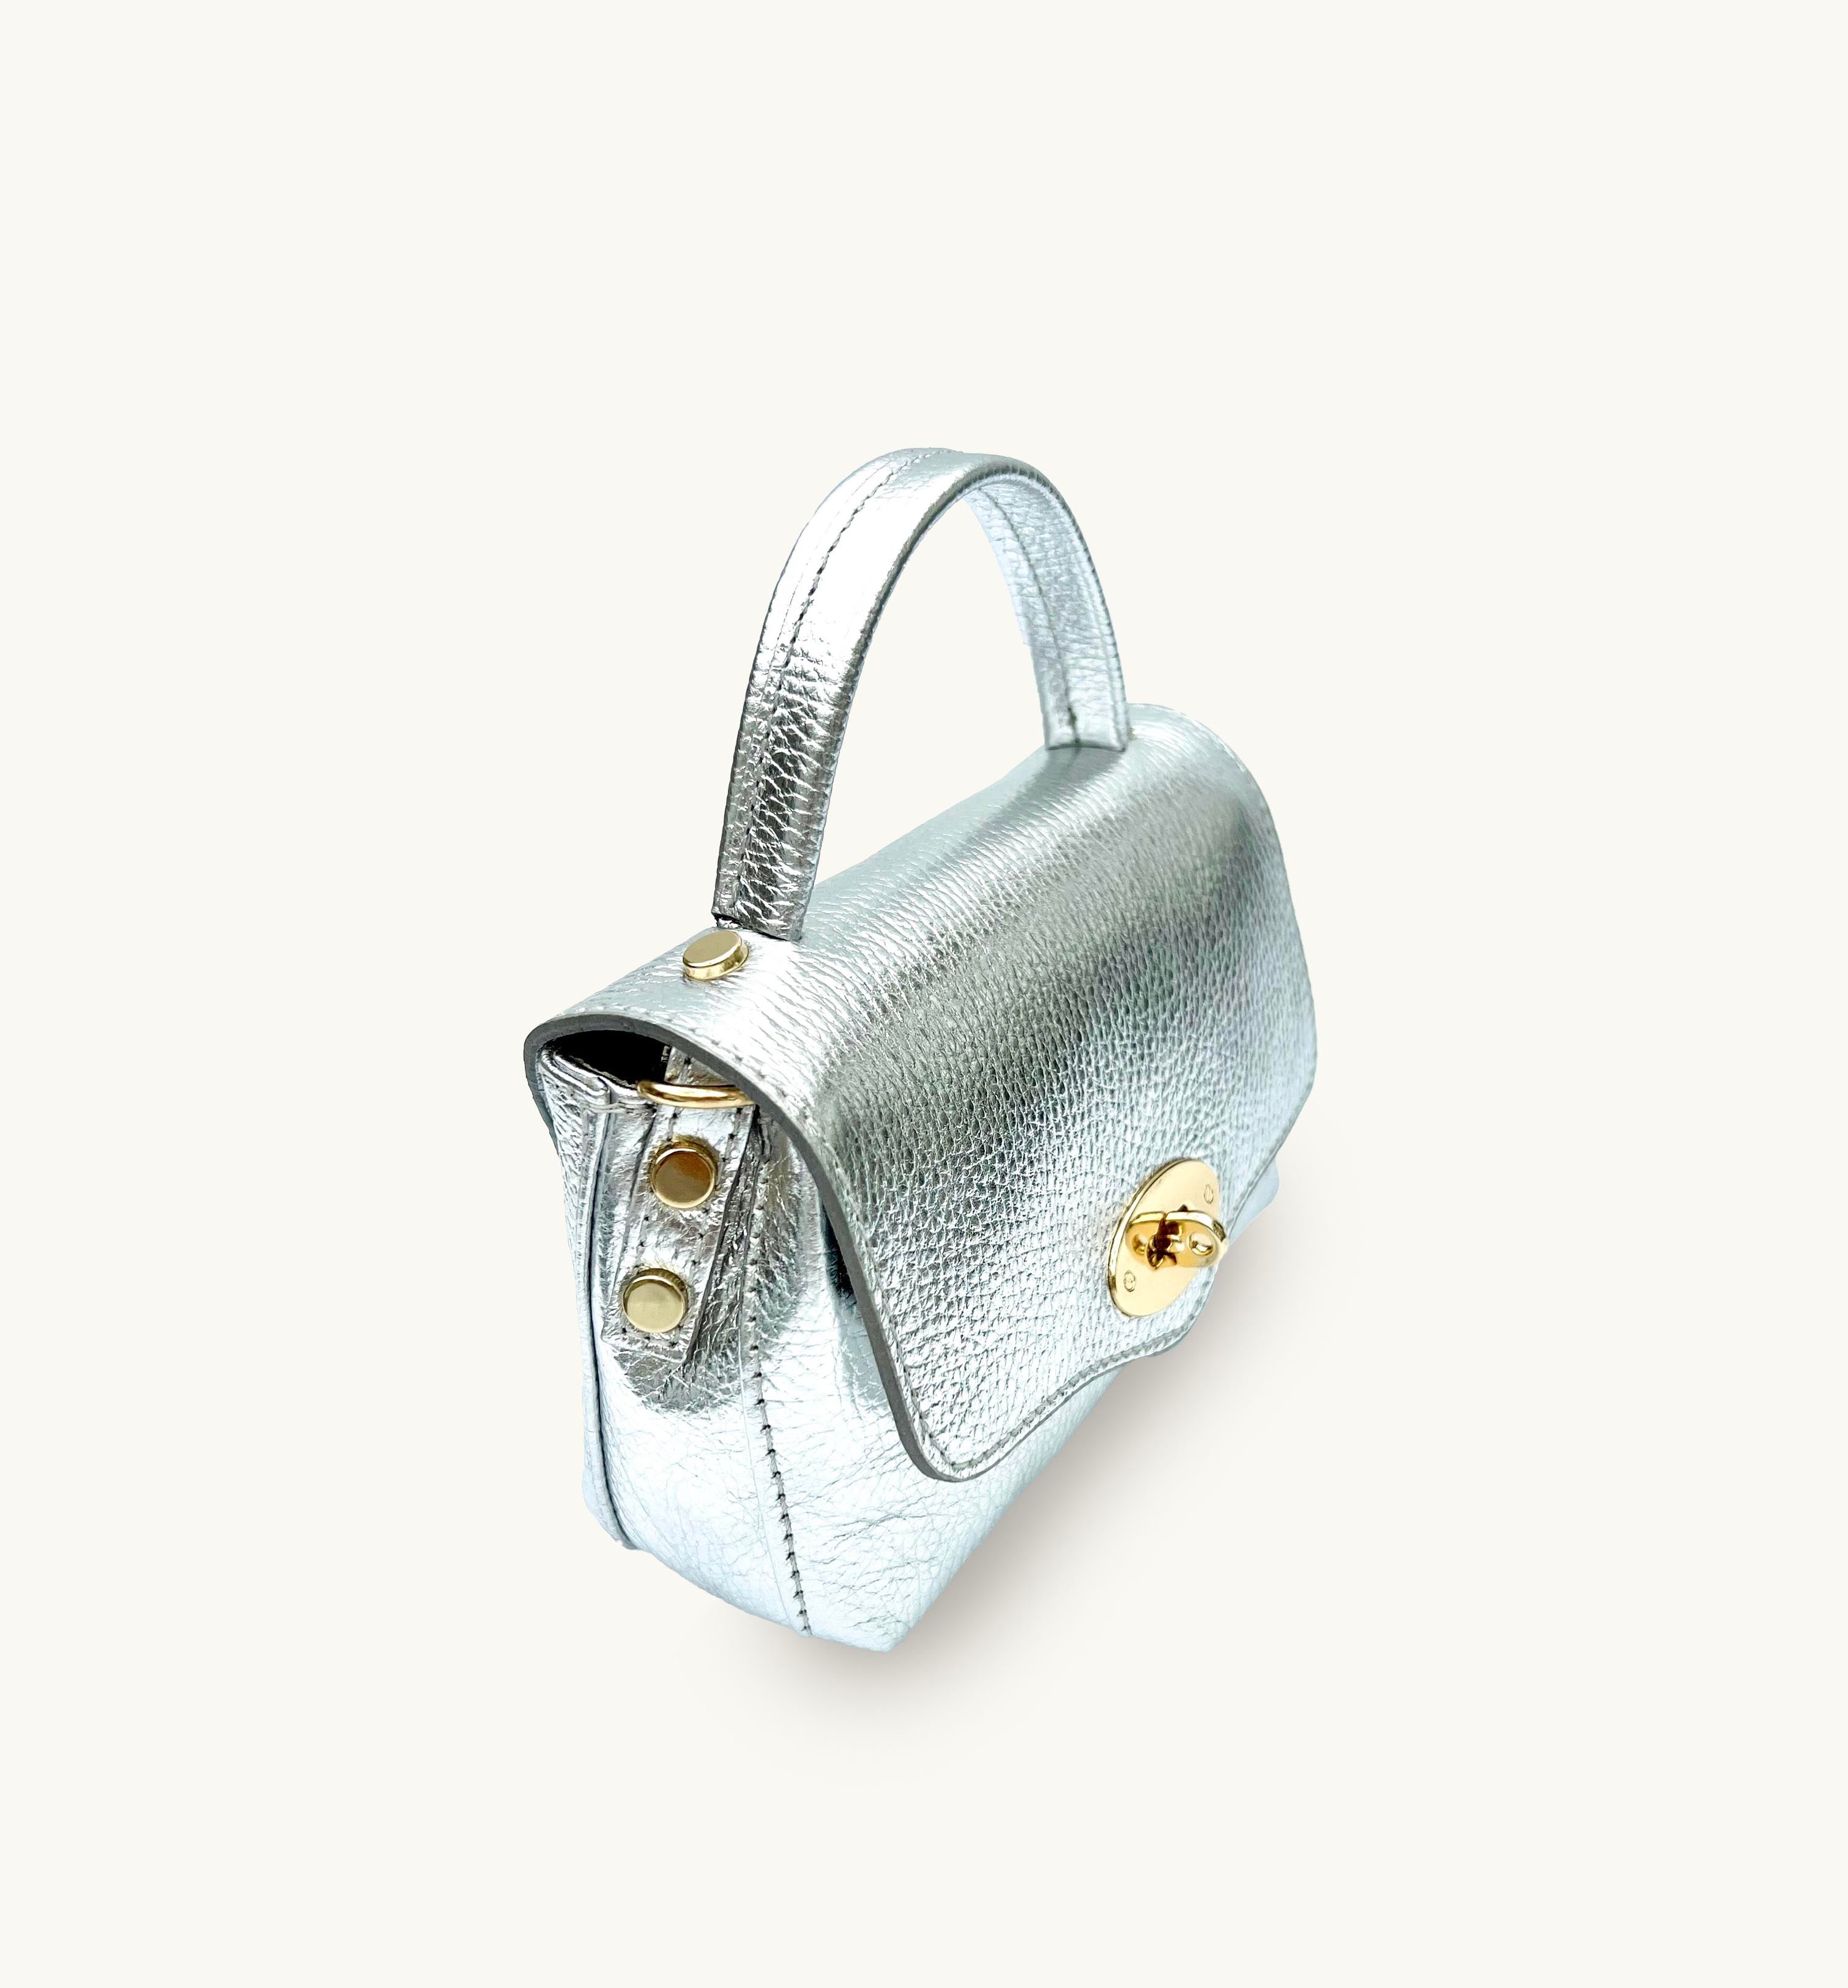 The Rachel Silver Leather Bag